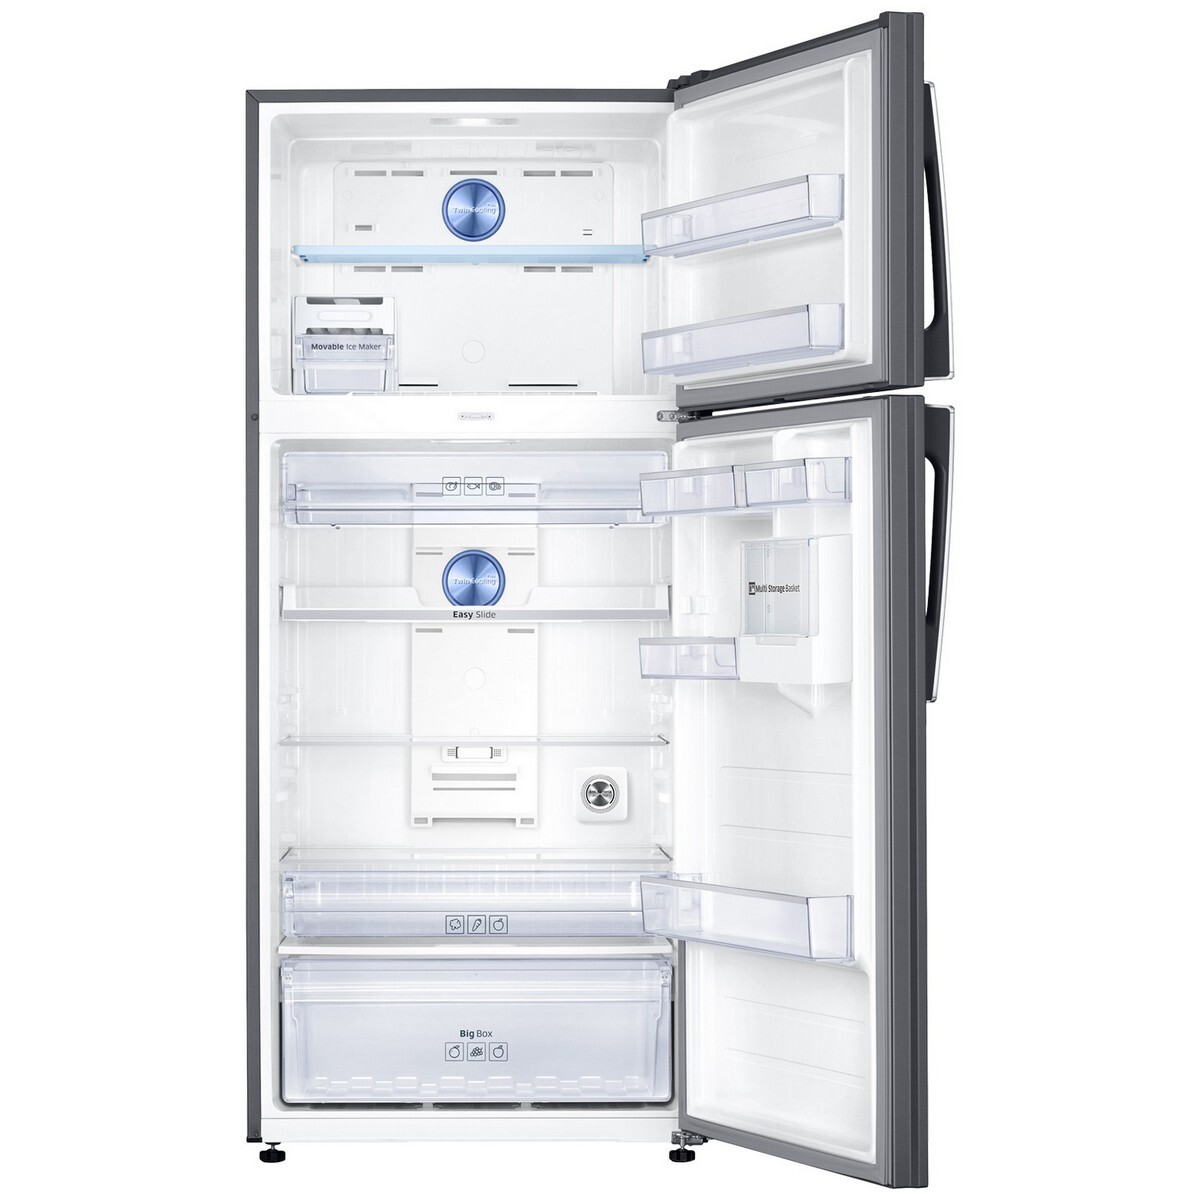 Samsung Frost Free Double Door Refrigerator RT56C637SSLTL 530L